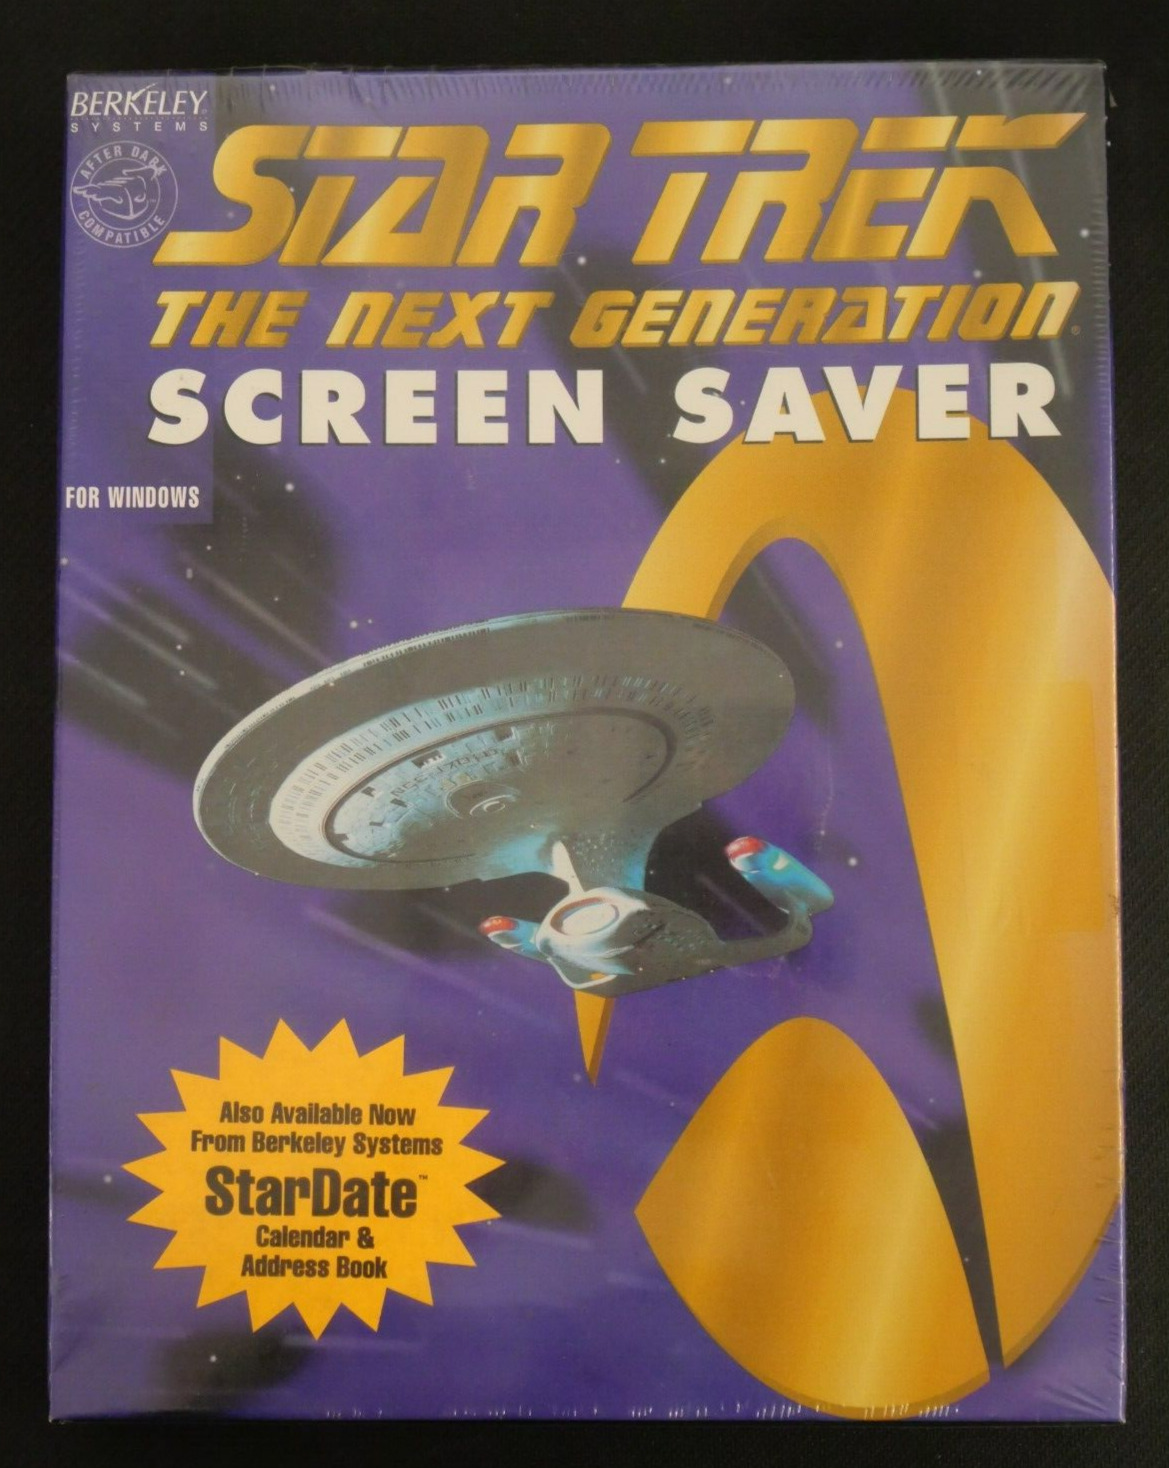 STAR TREK THE NEXT GENERATION SCREEN SAVER FOR WINDOWS BERKELEY SYSTEMS (1994)